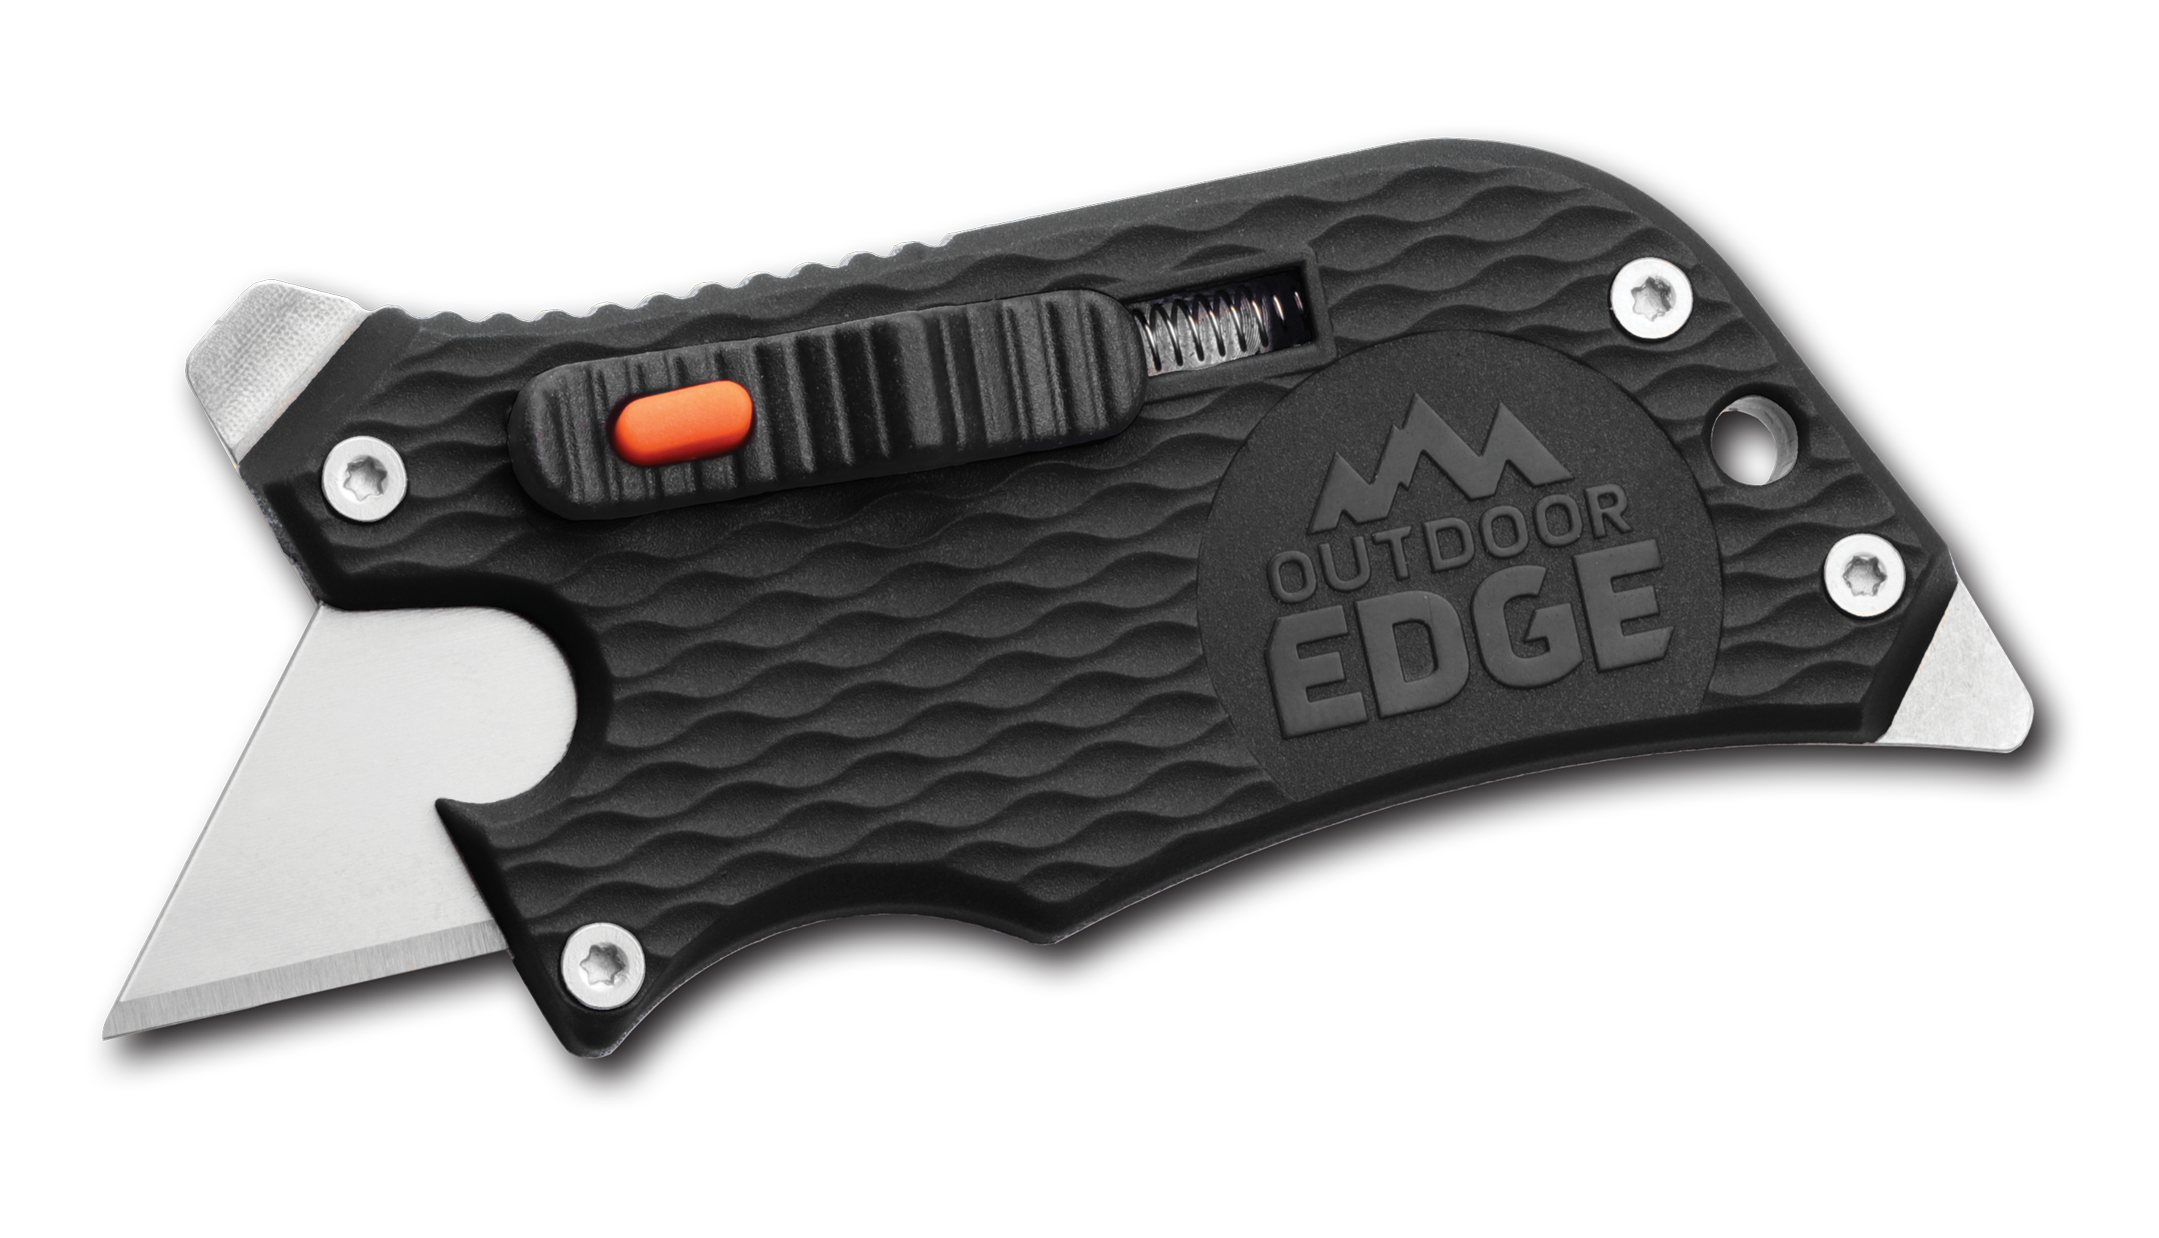 Outdoor Edge Slidewinder Utility Blade Multitool